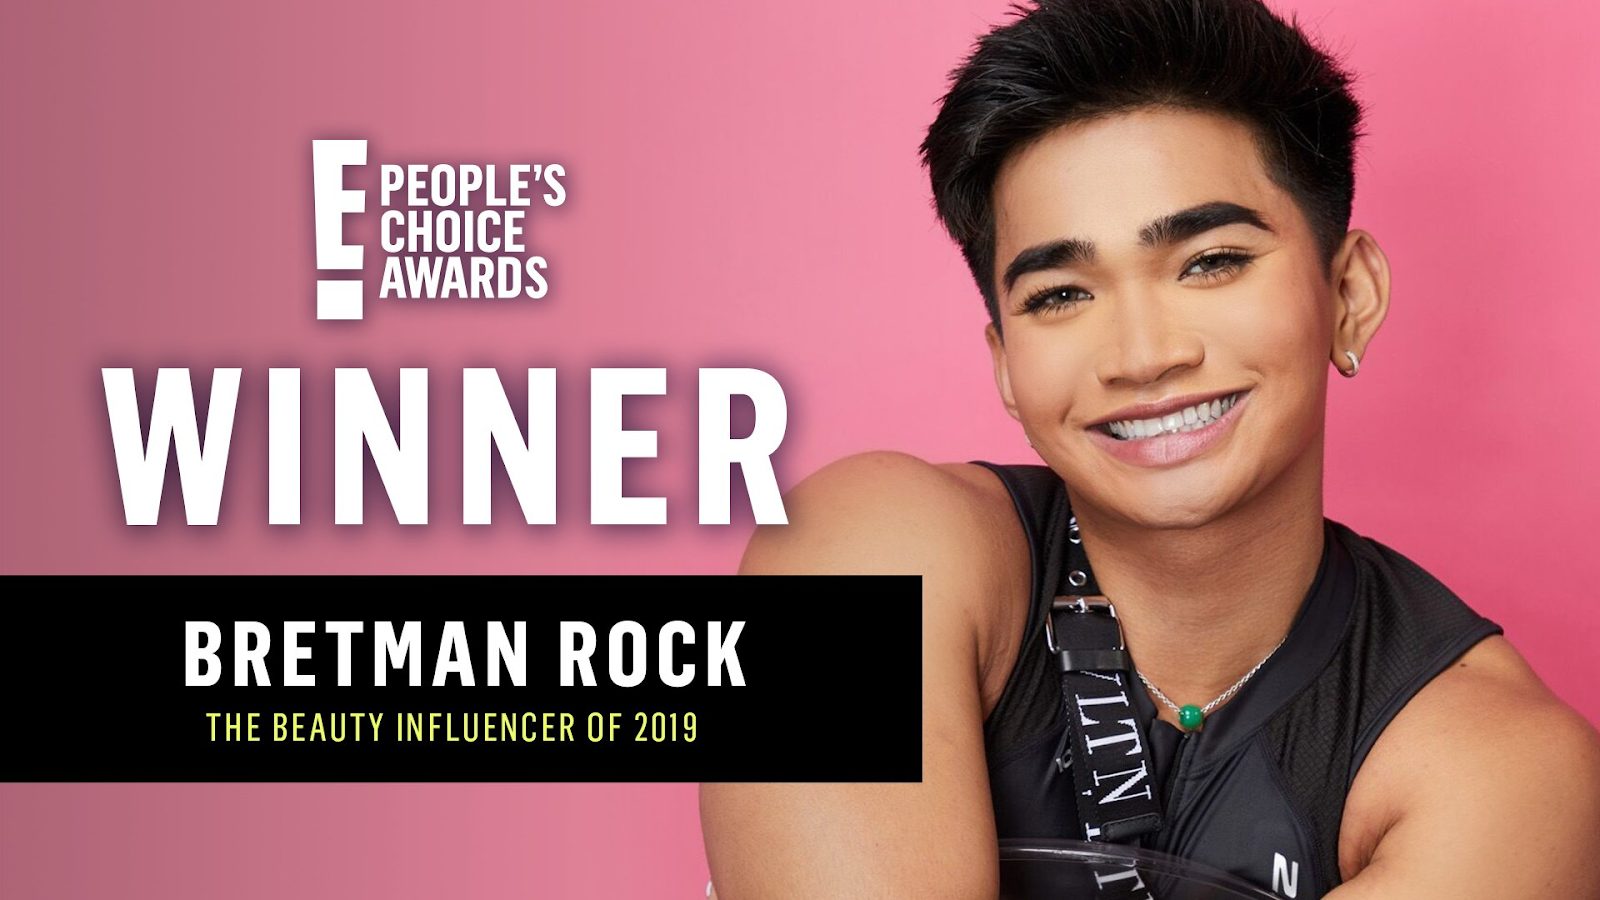 Filipino Youtuber Bretman Rock wins People’s Choice Award ‘The Beauty Influencer of 2019’